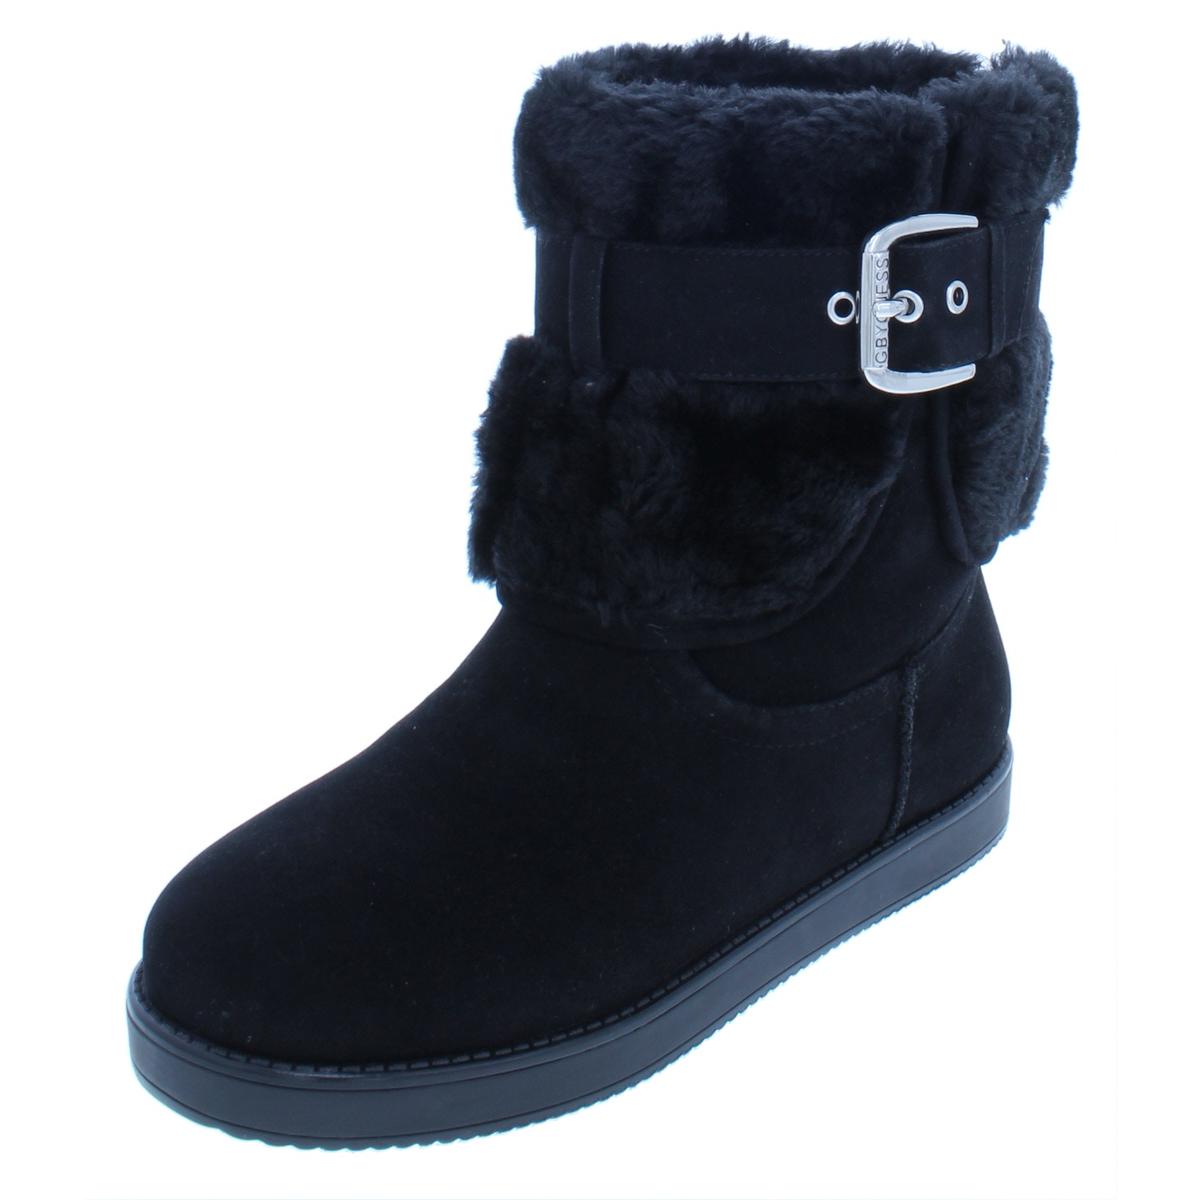 G by Guess Womens Amburr Black Winter Boots Shoes 9 Medium (B,M) BHFO ...